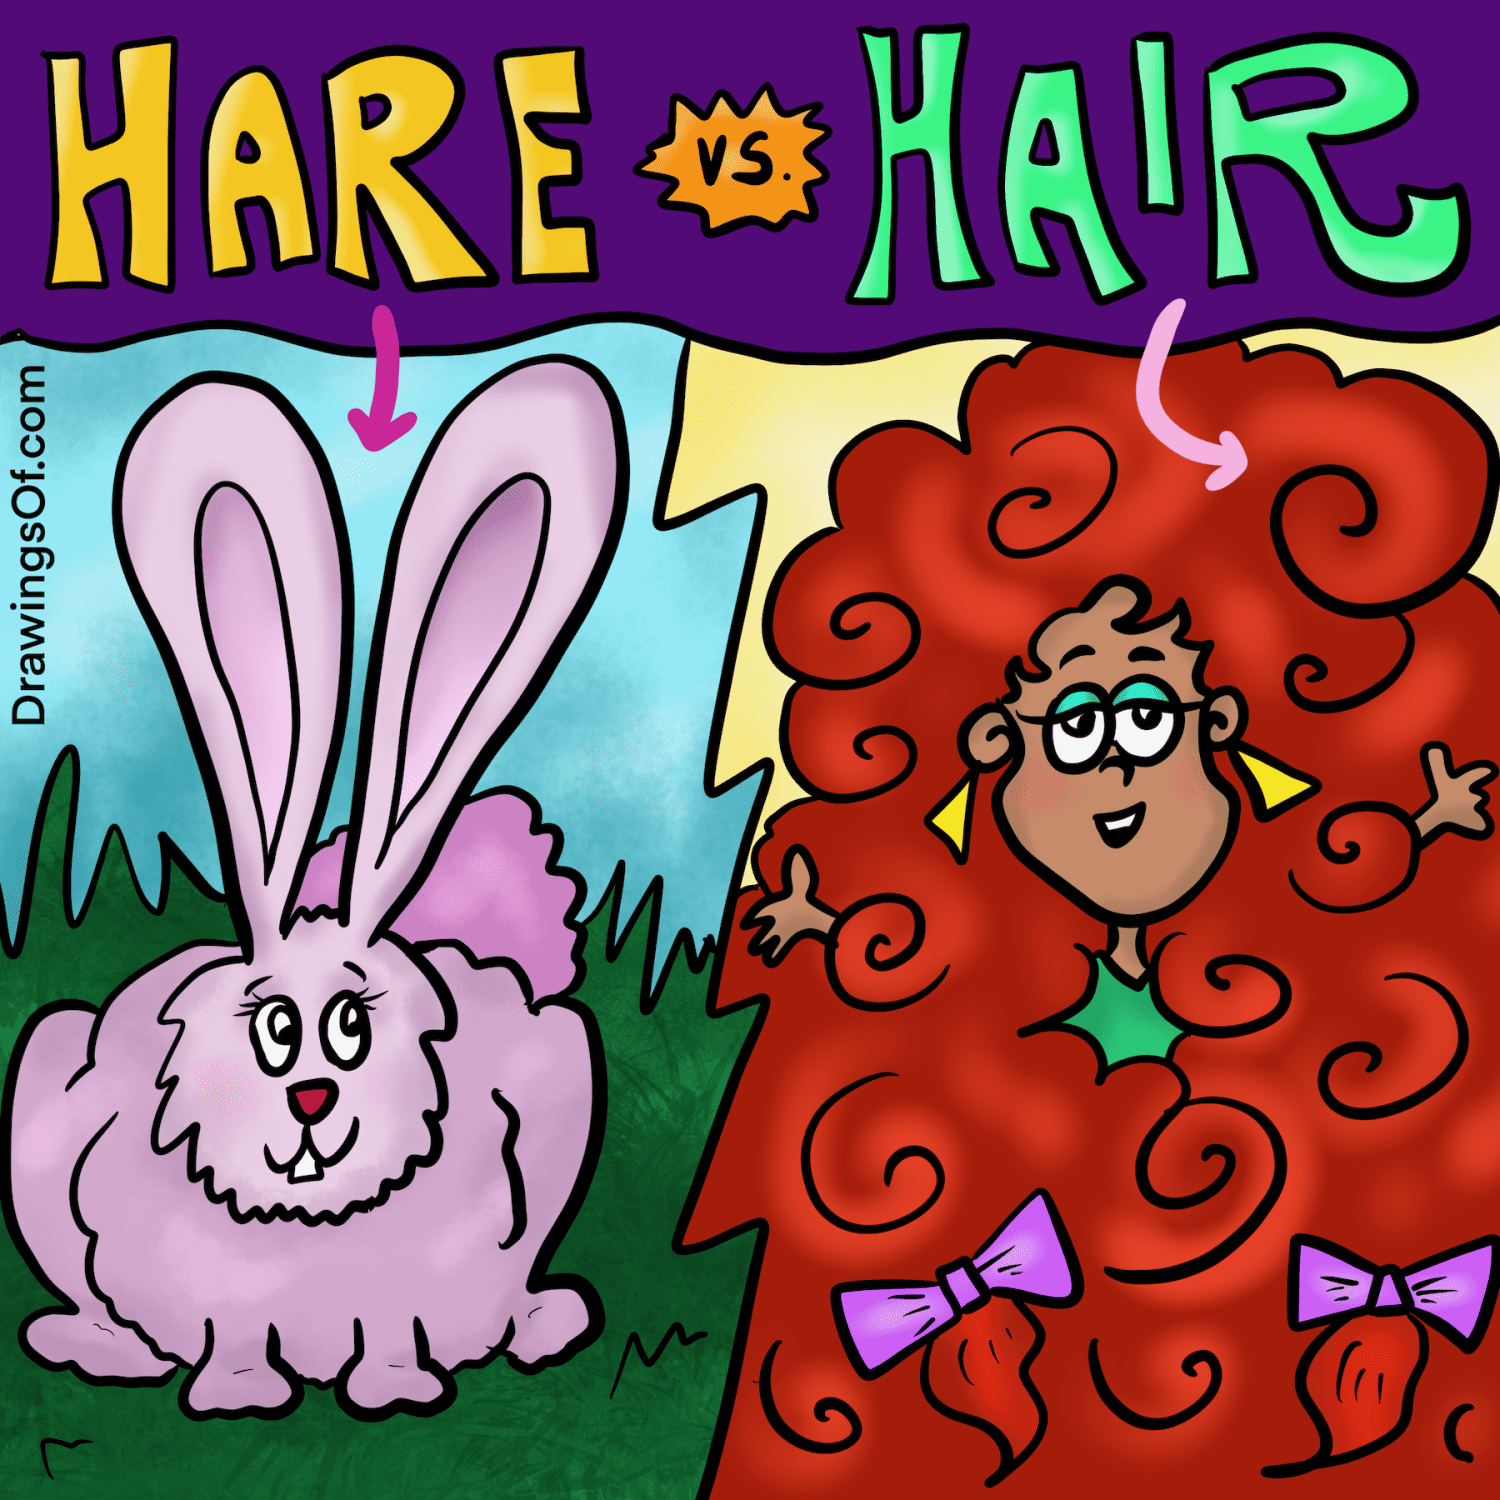 Hare vs. Hair